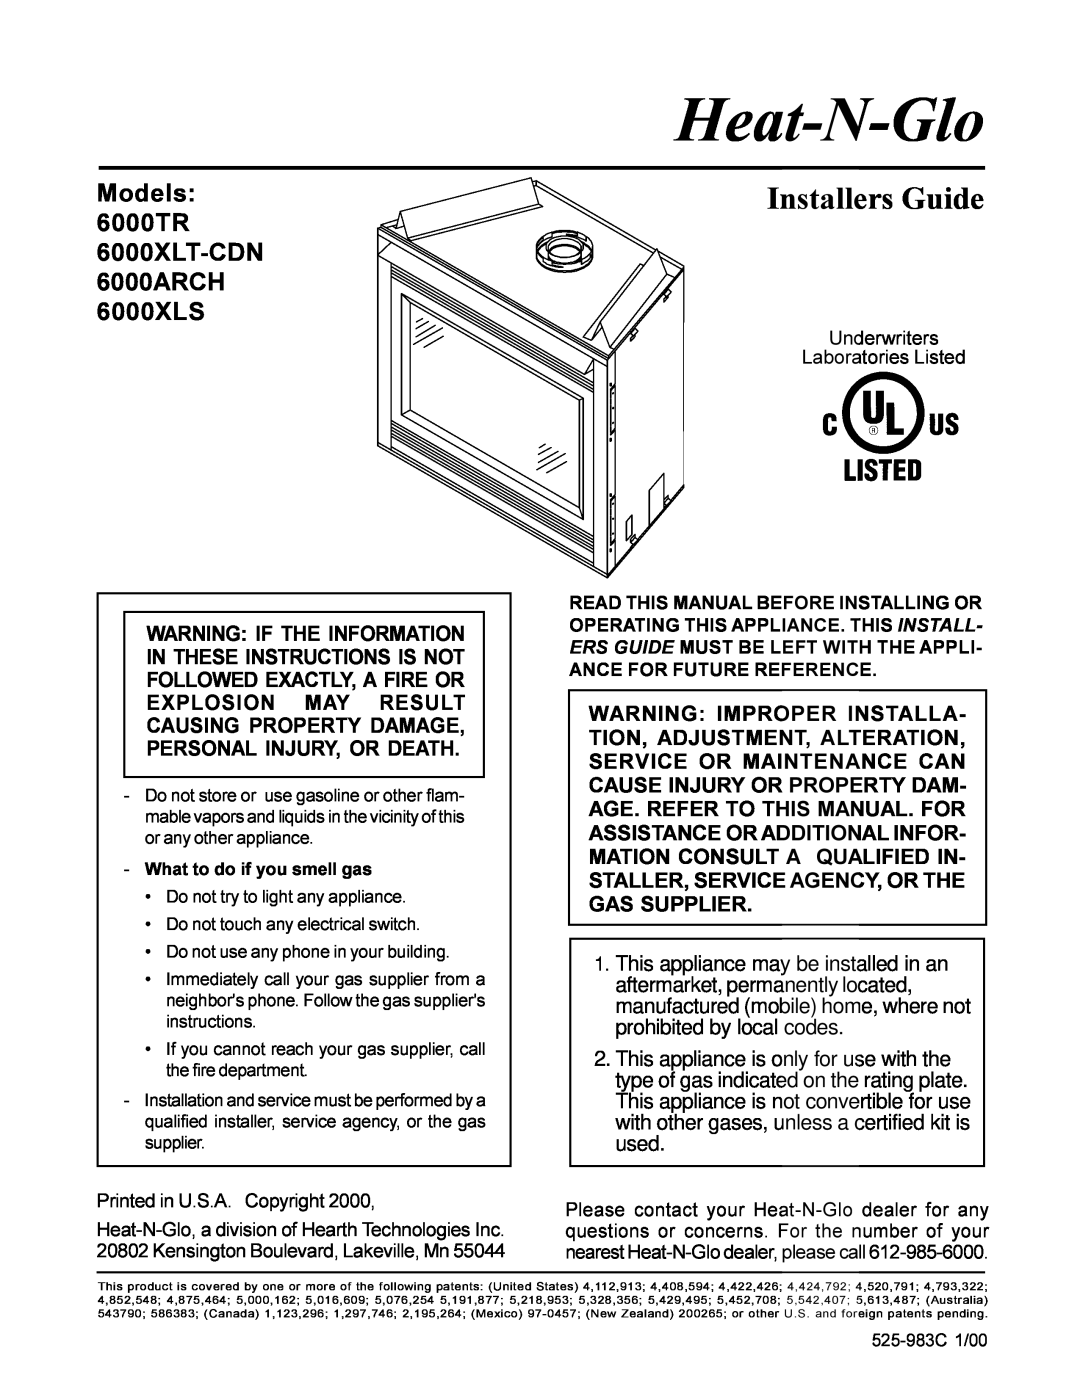 Heat & Glo LifeStyle manual Models 6000TR 6000XLT-CDN6000ARCH 6000XLS, Heat-N-Glo, Installers Guide 